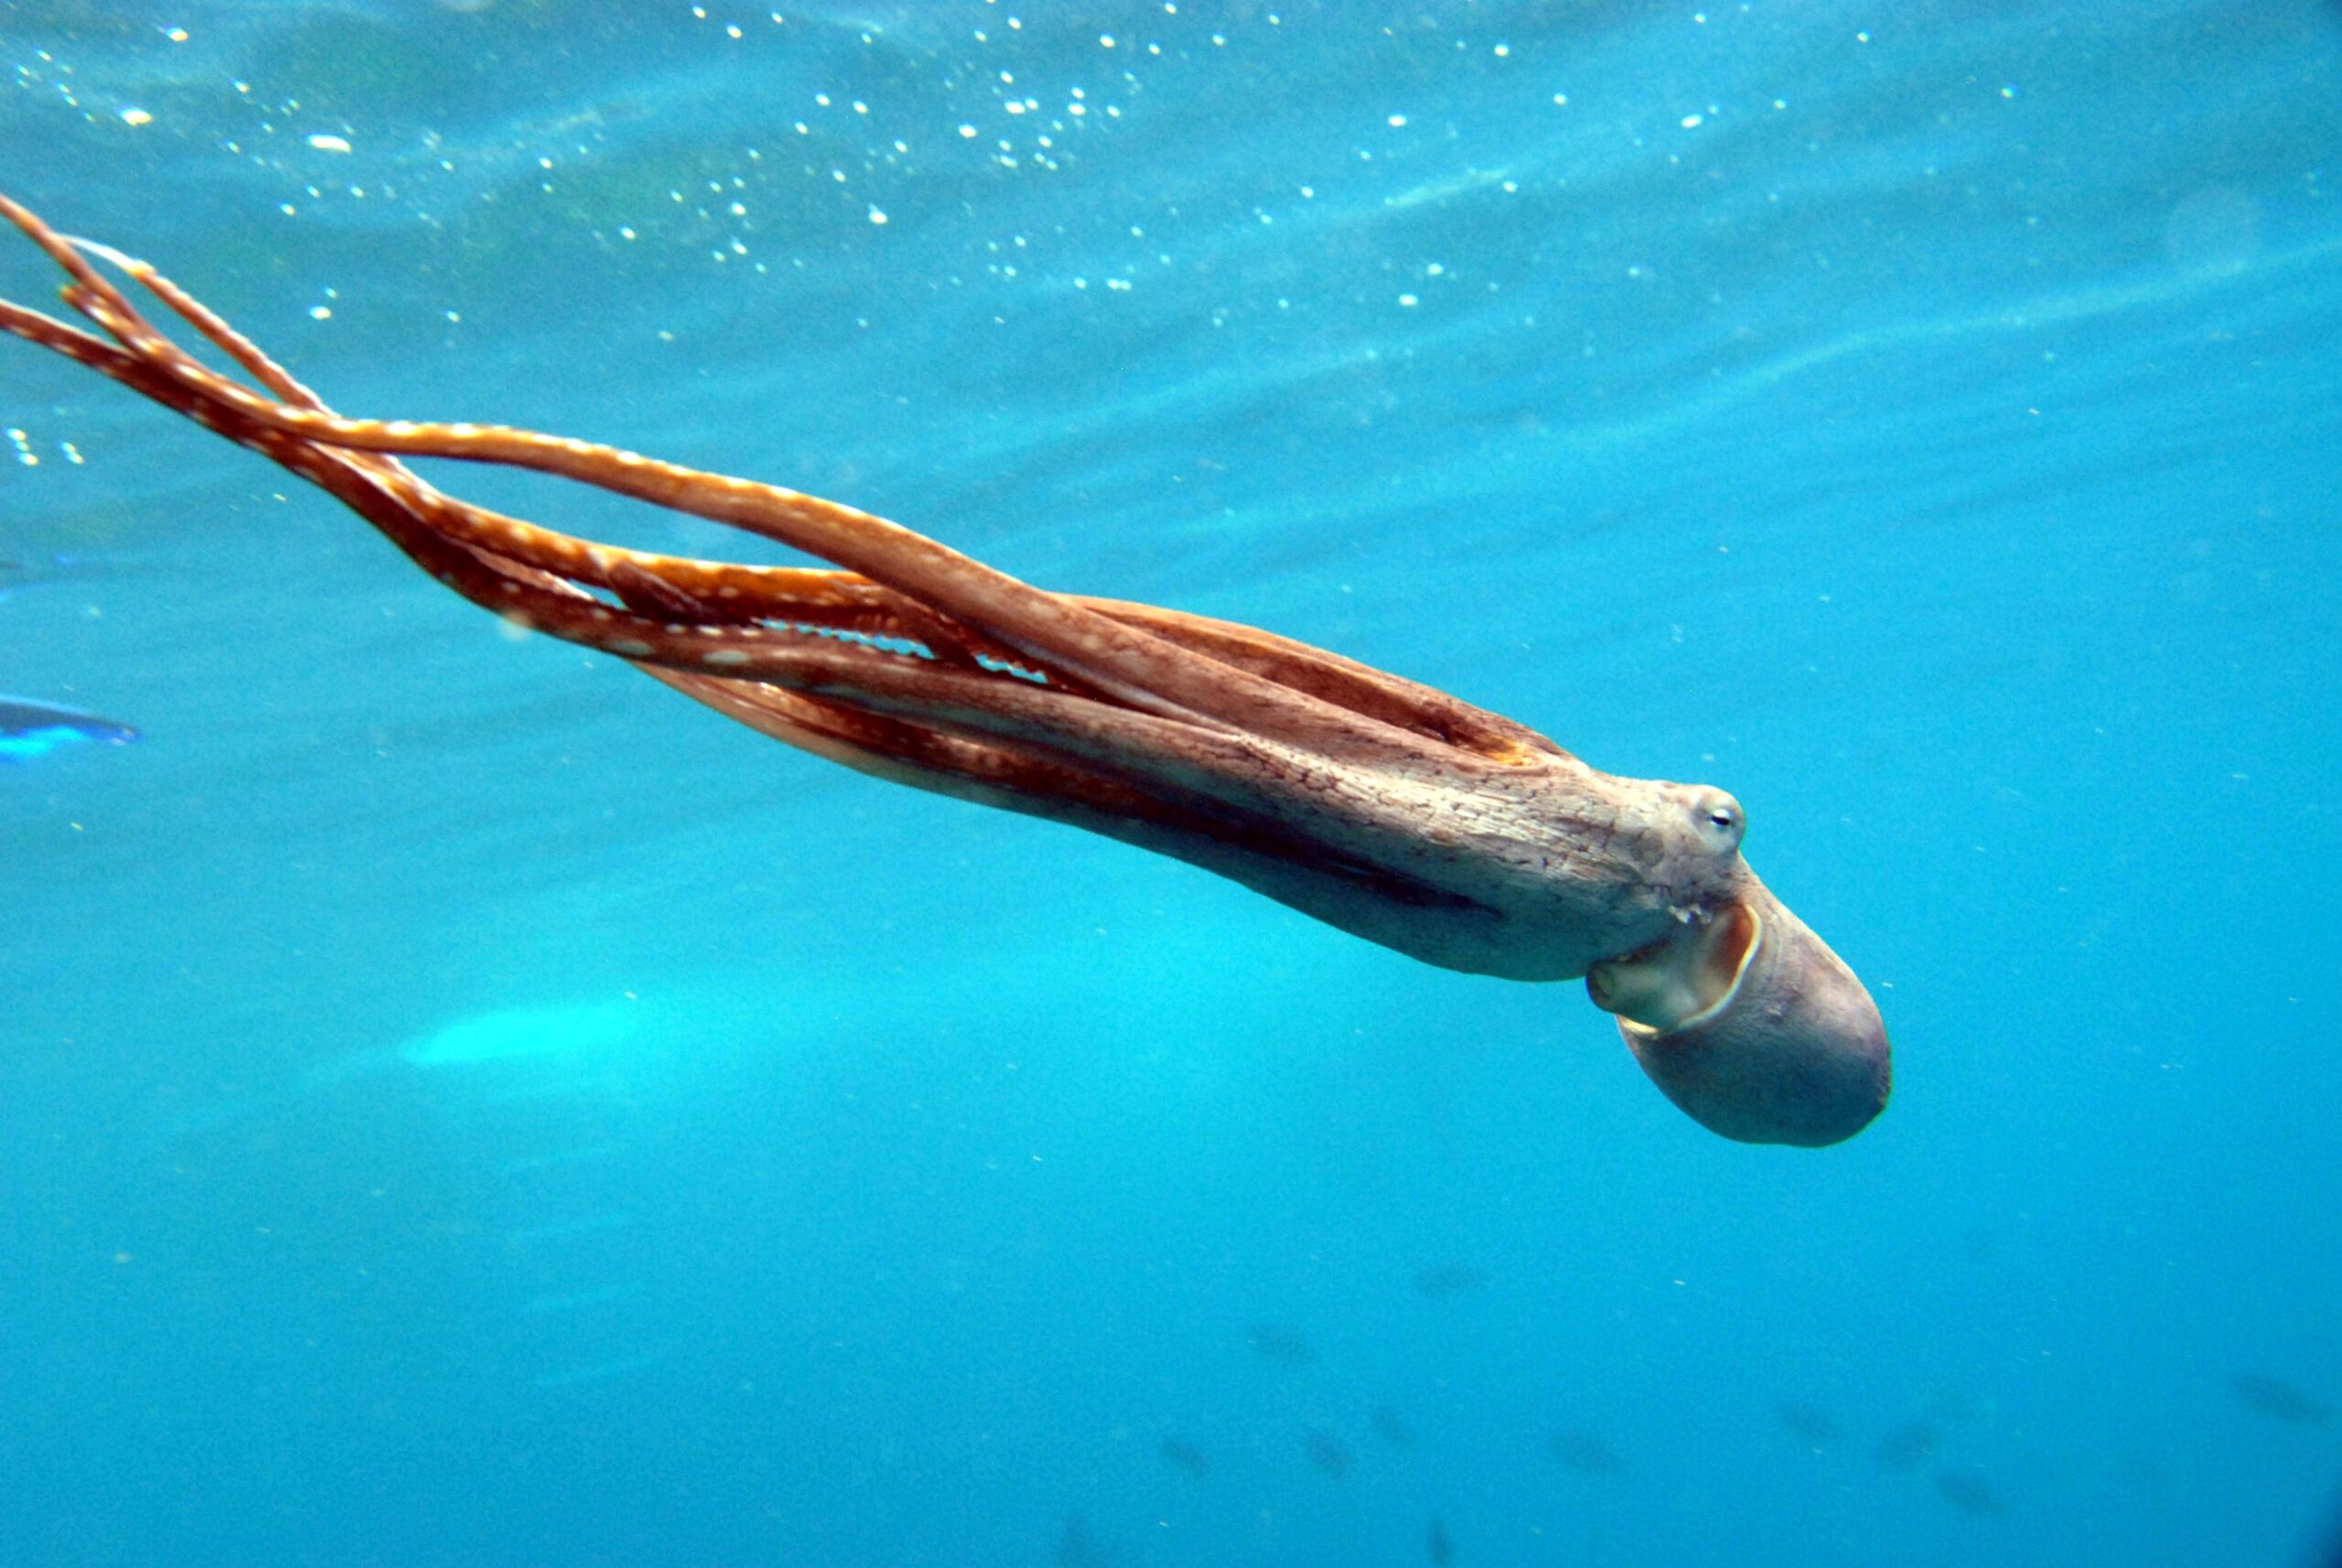 Octopus swimming